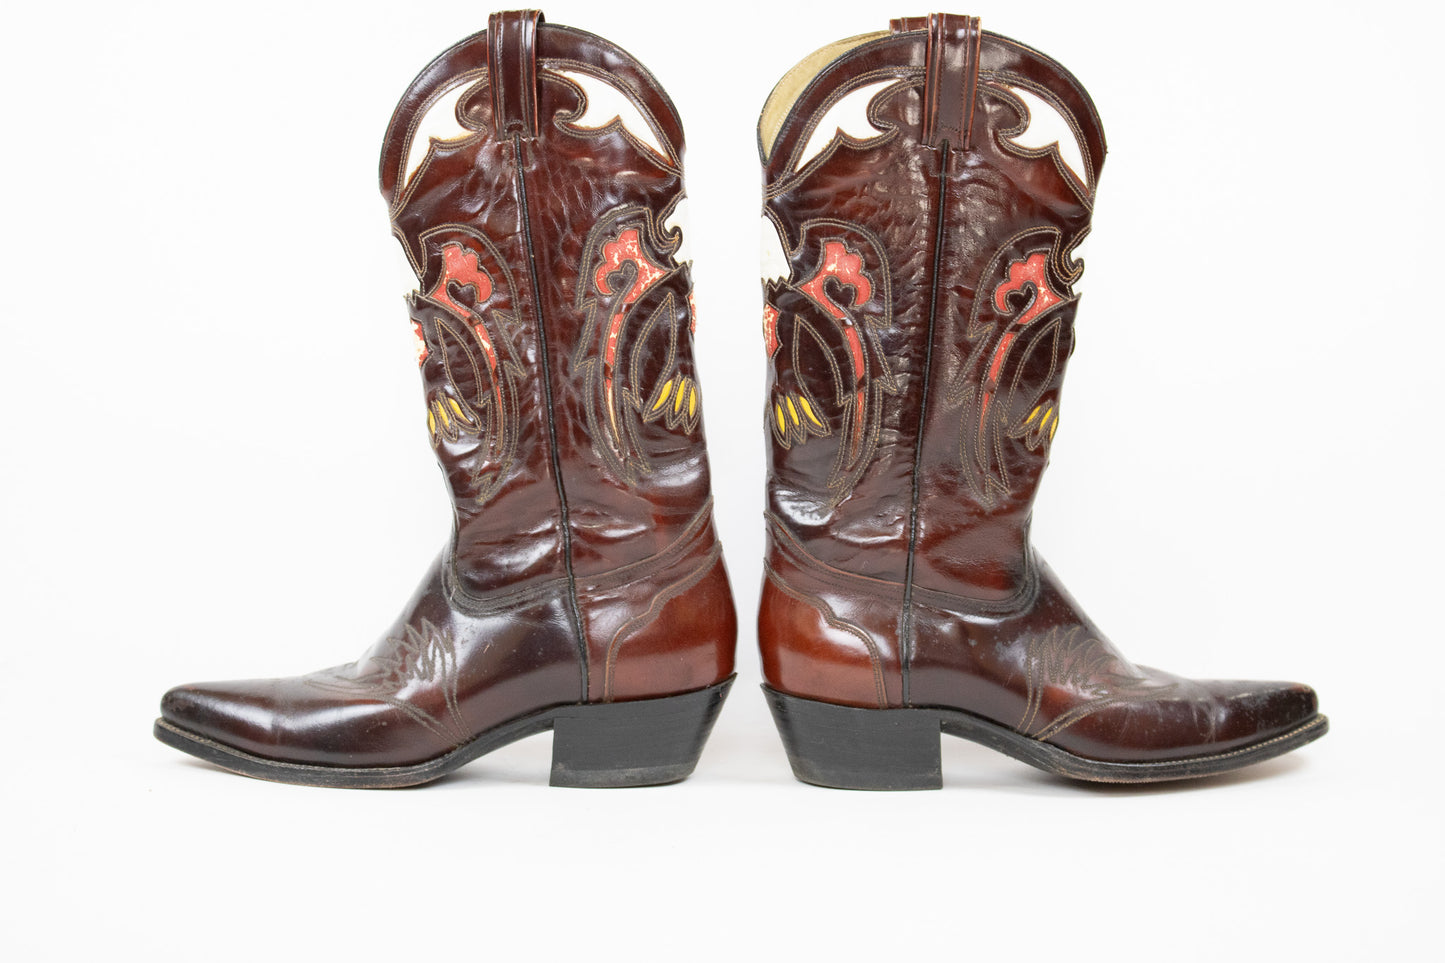 J. Chisholm Western Boots